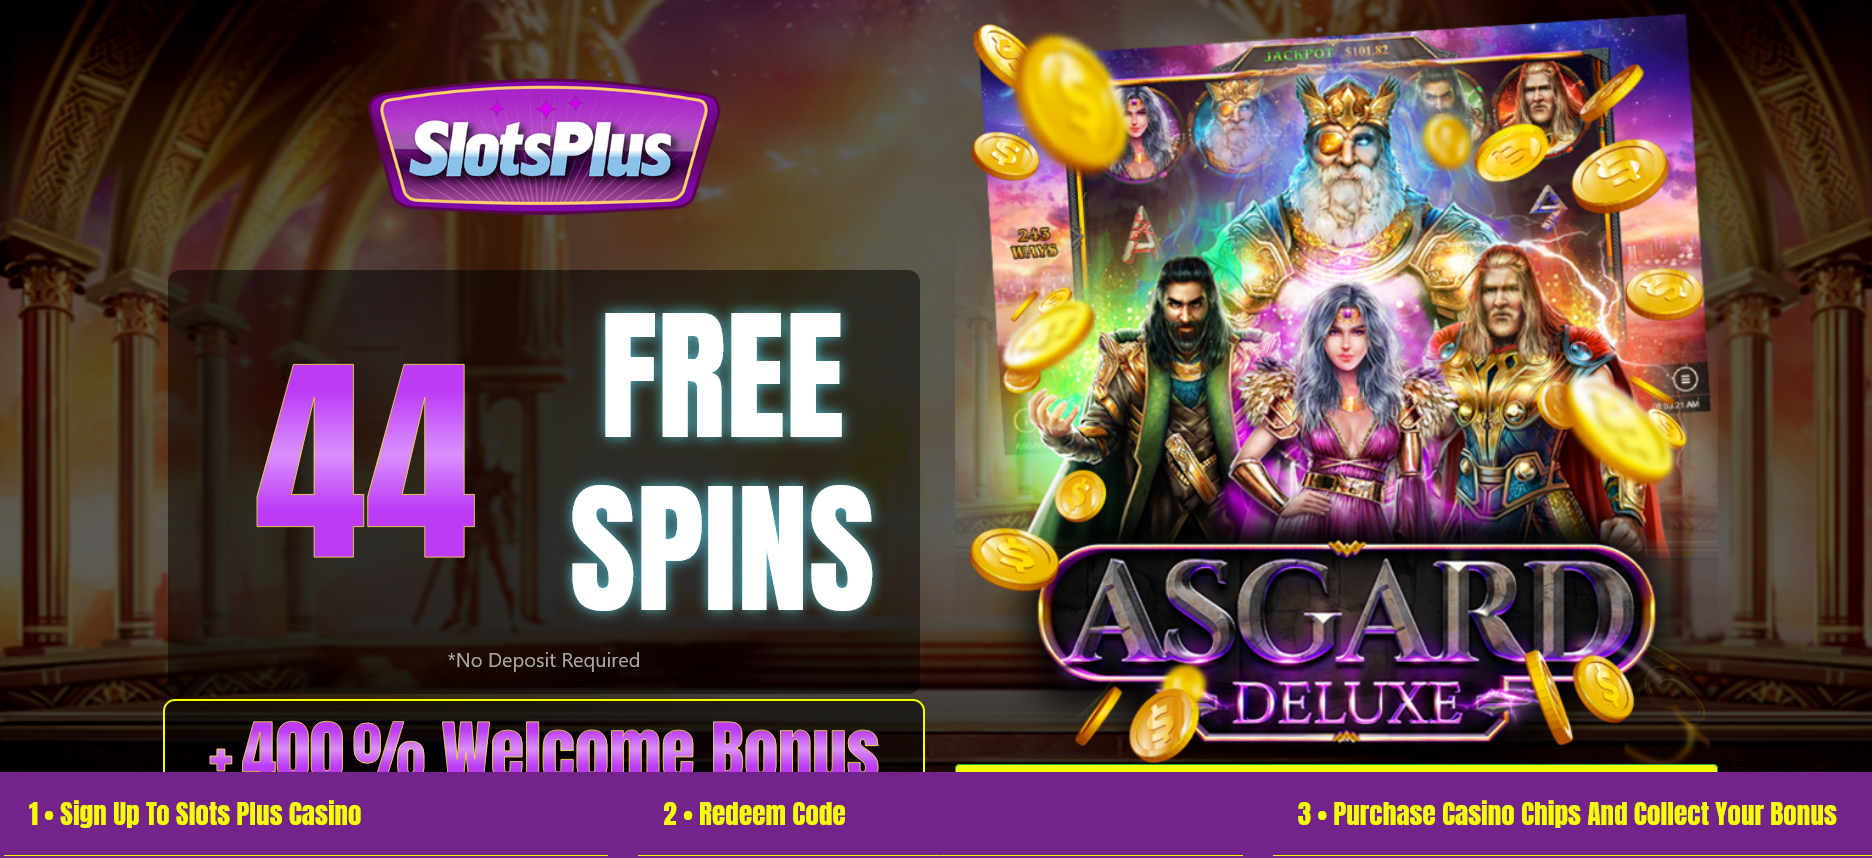 Slots Plus Casino-%400 WELCOME
                BONUS + 44 FREE SPINS